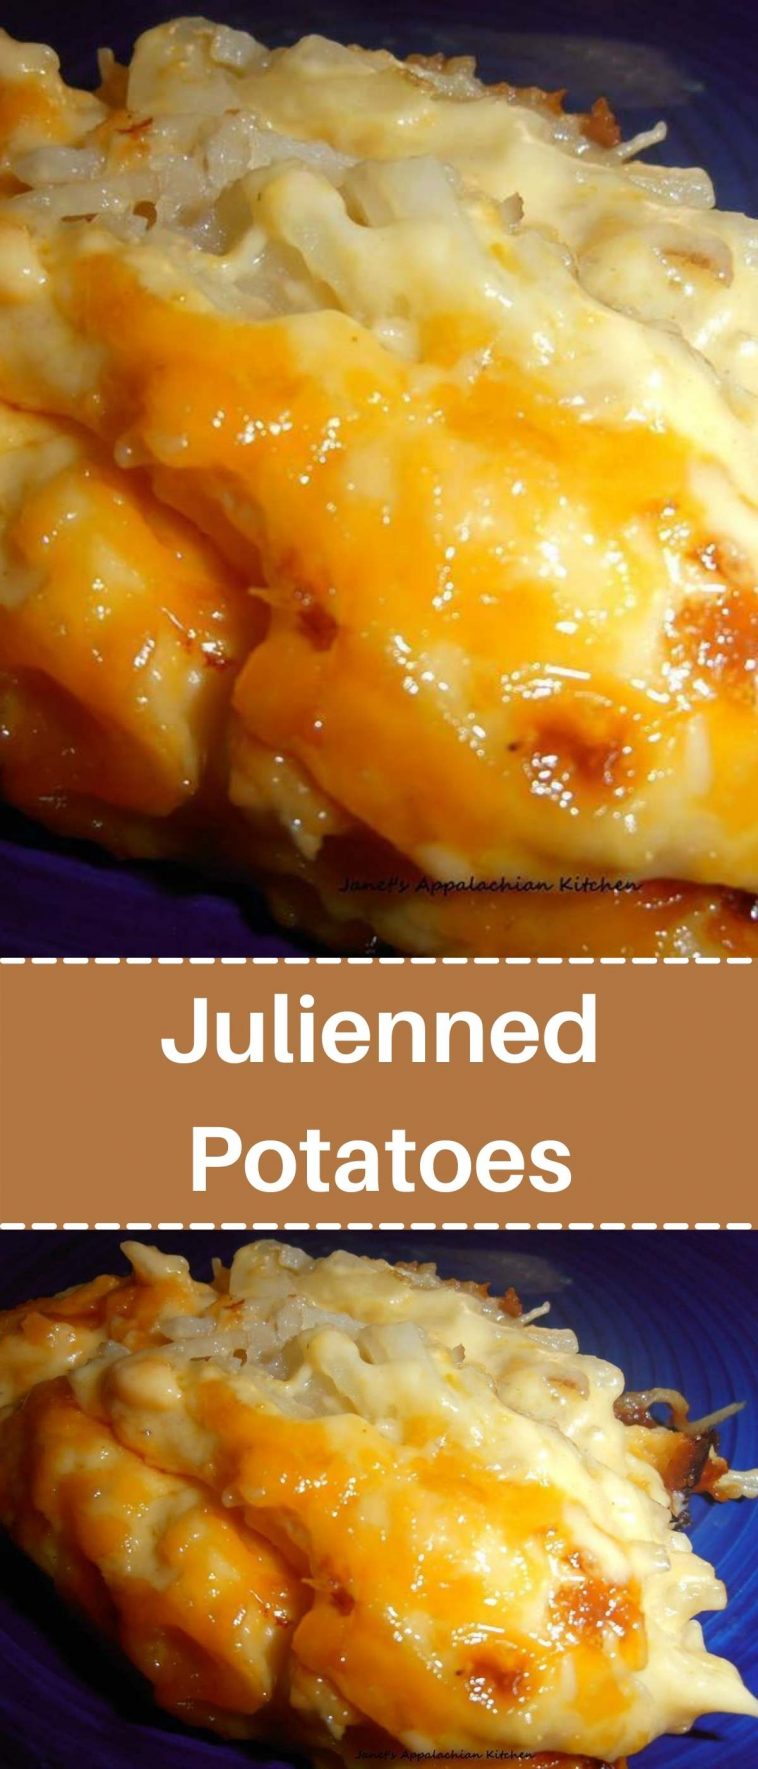 Julienned Potatoes